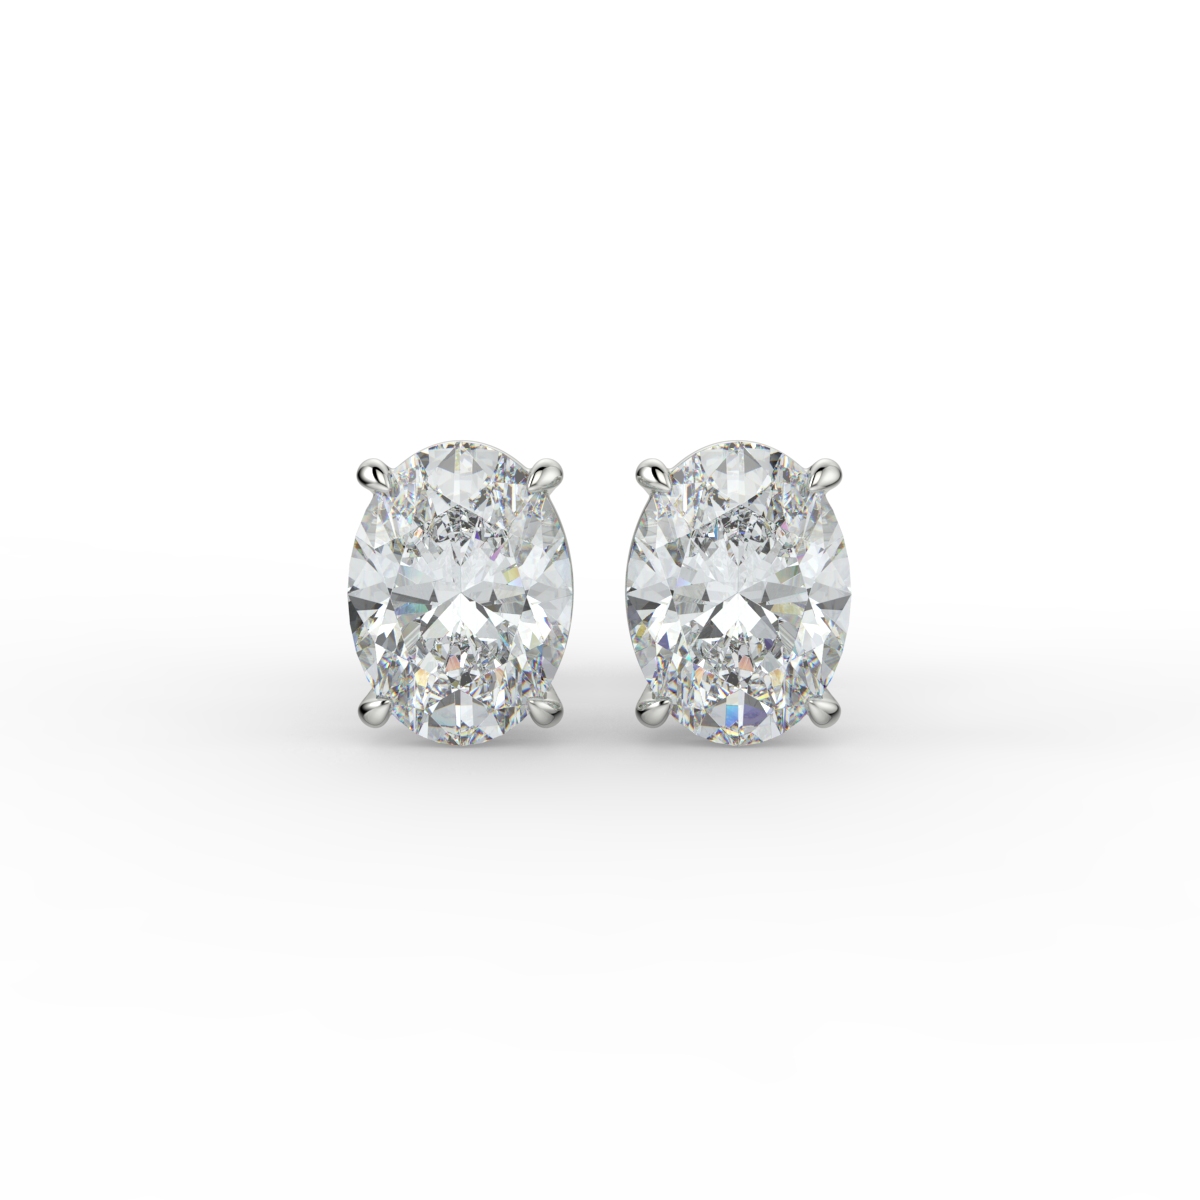 Oval Diamond Studs Earrings White Gold - KATIE